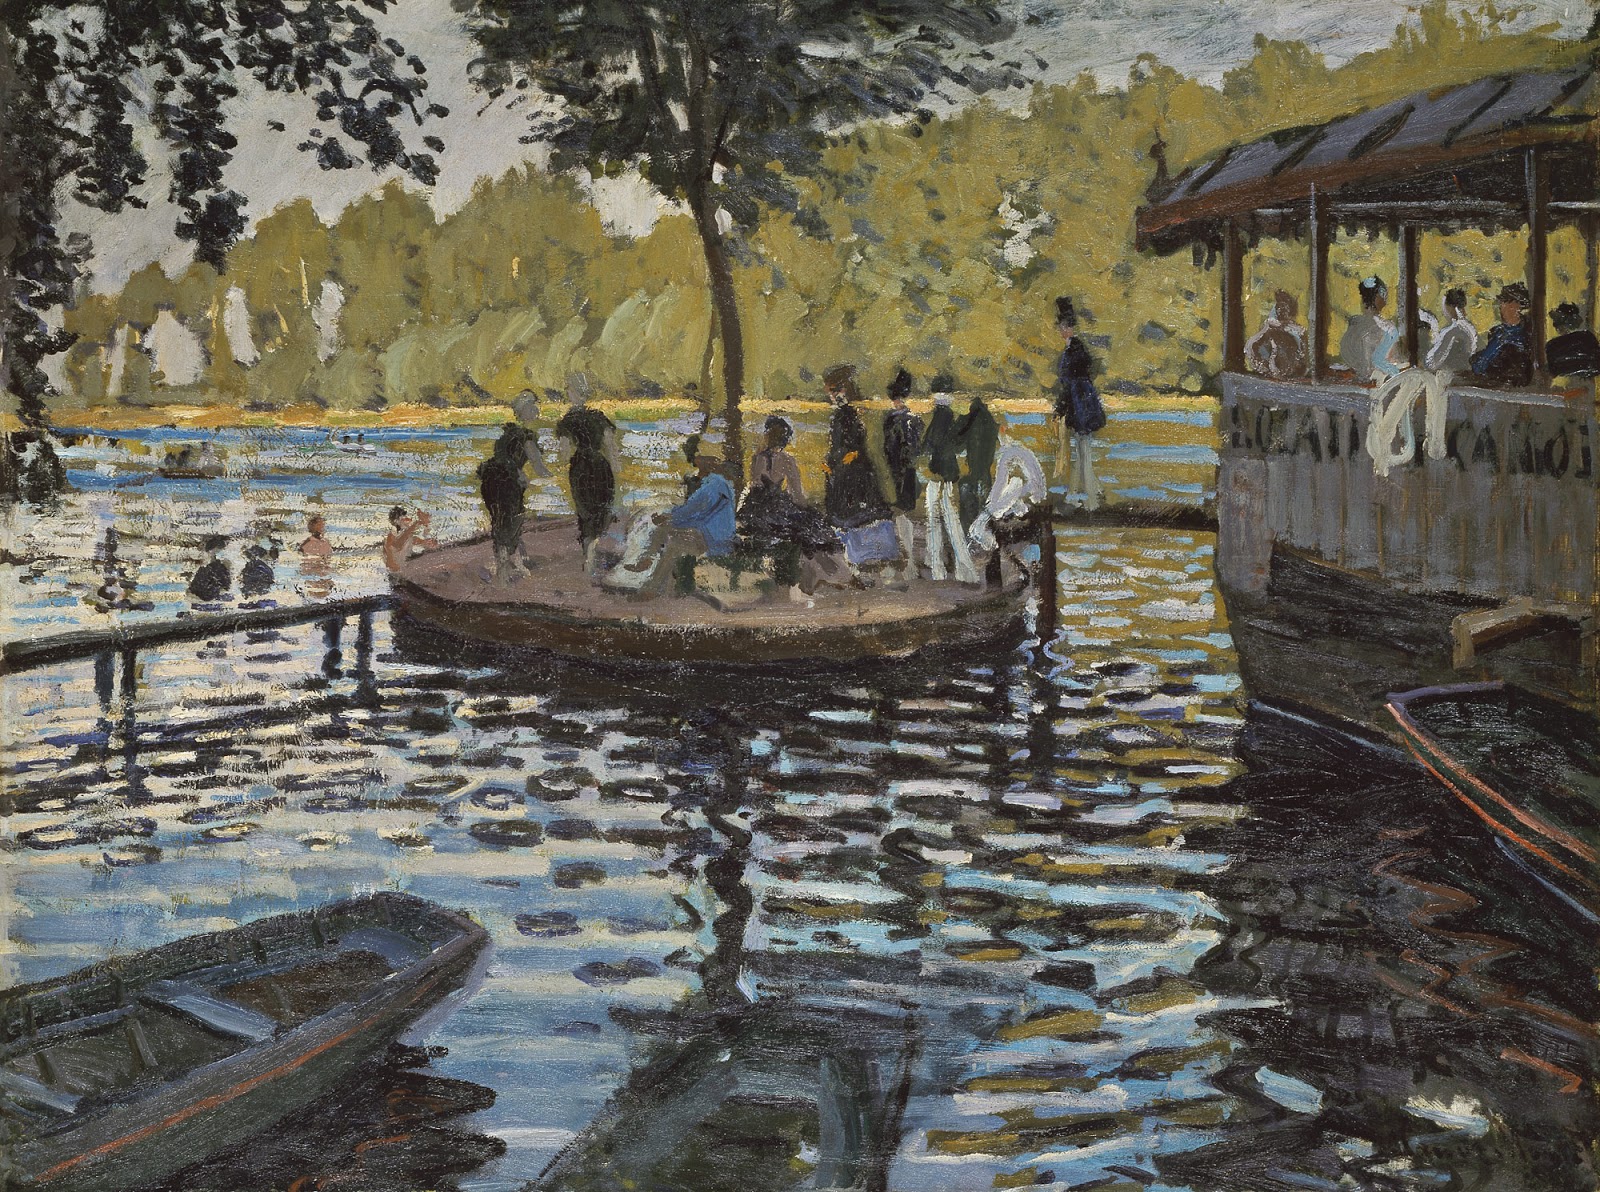 Claude+Monet-1840-1926 (352).jpg